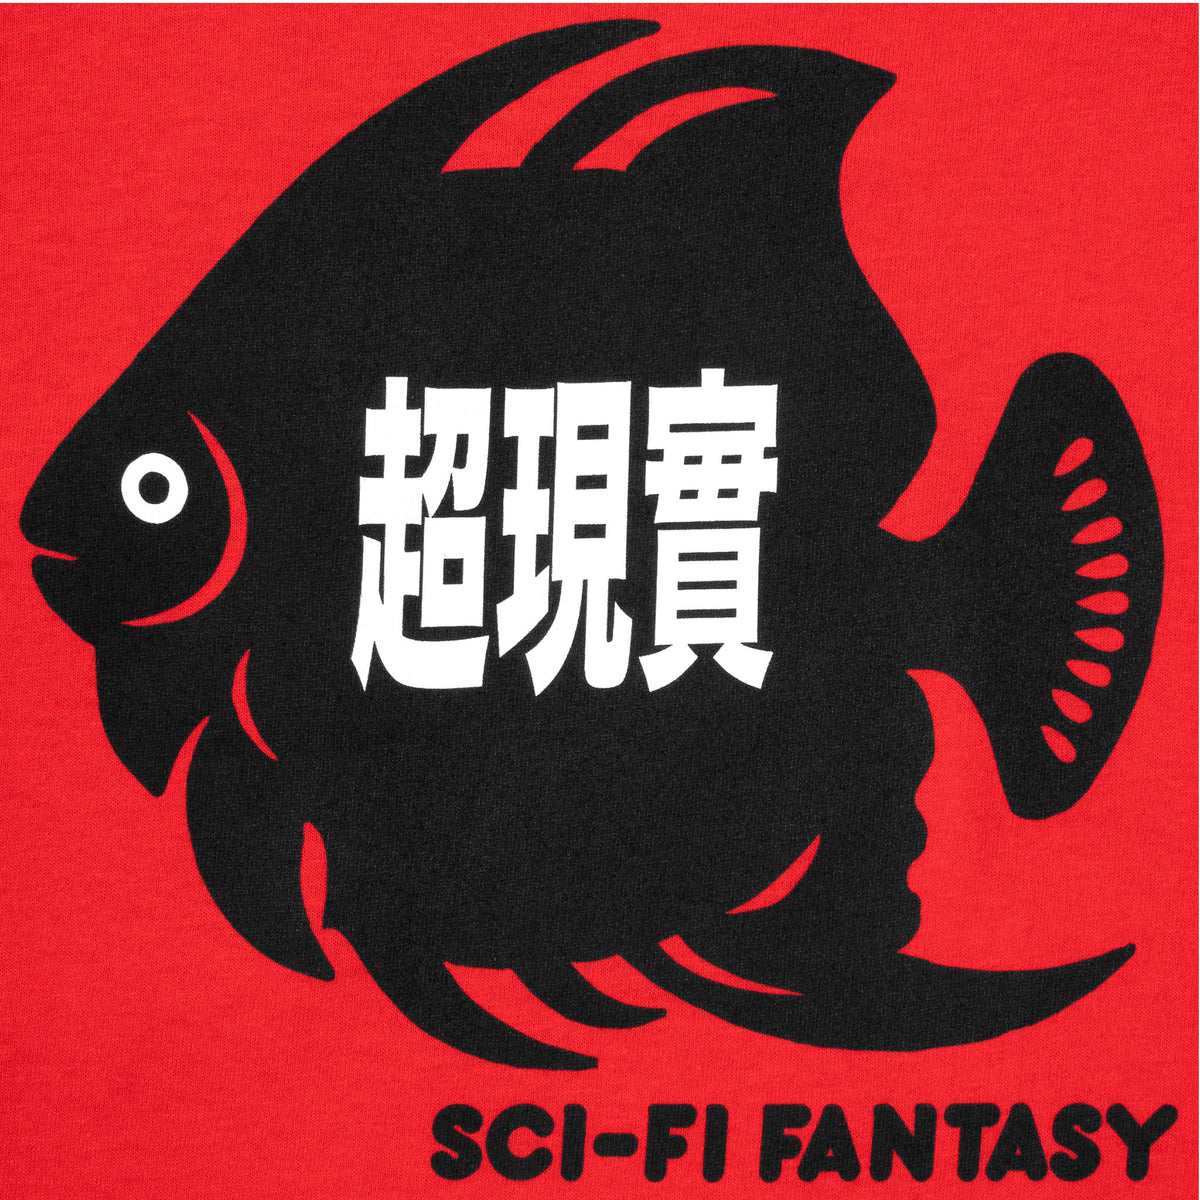 Sci-Fi Fantasy Fish Pocket T-Shirt Red - Venue Skateboards